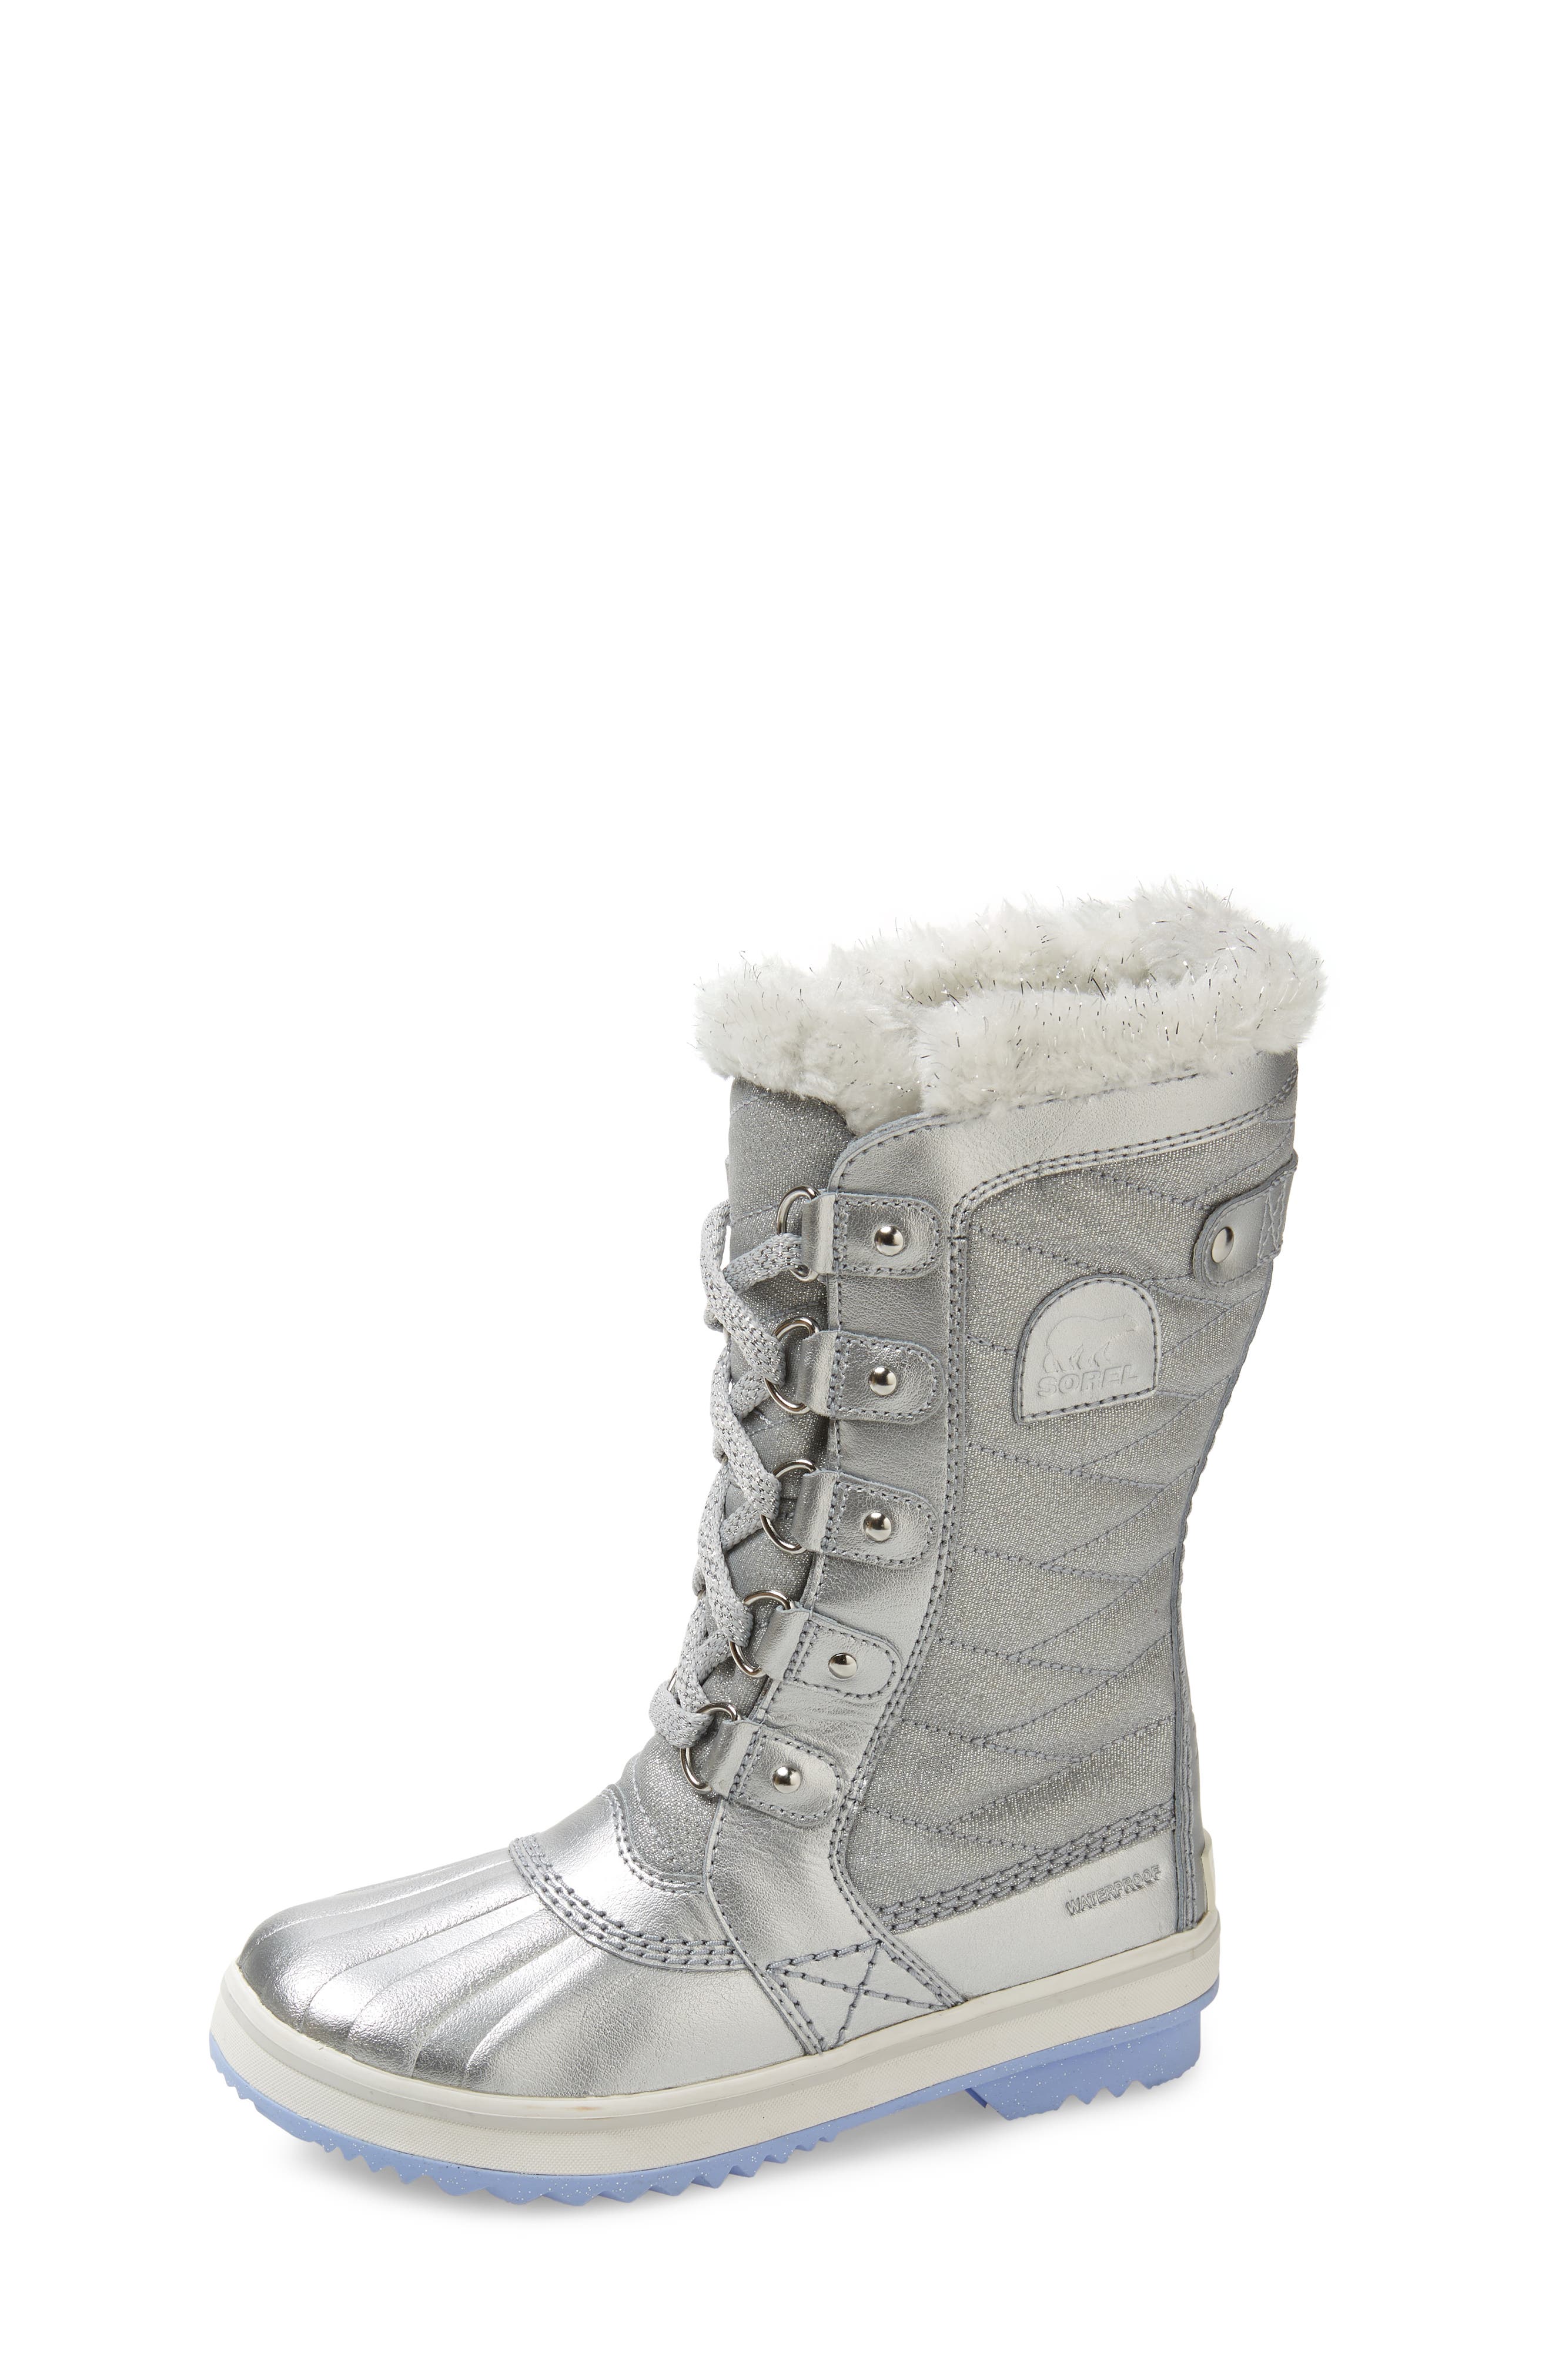 nordstrom rack snow boots